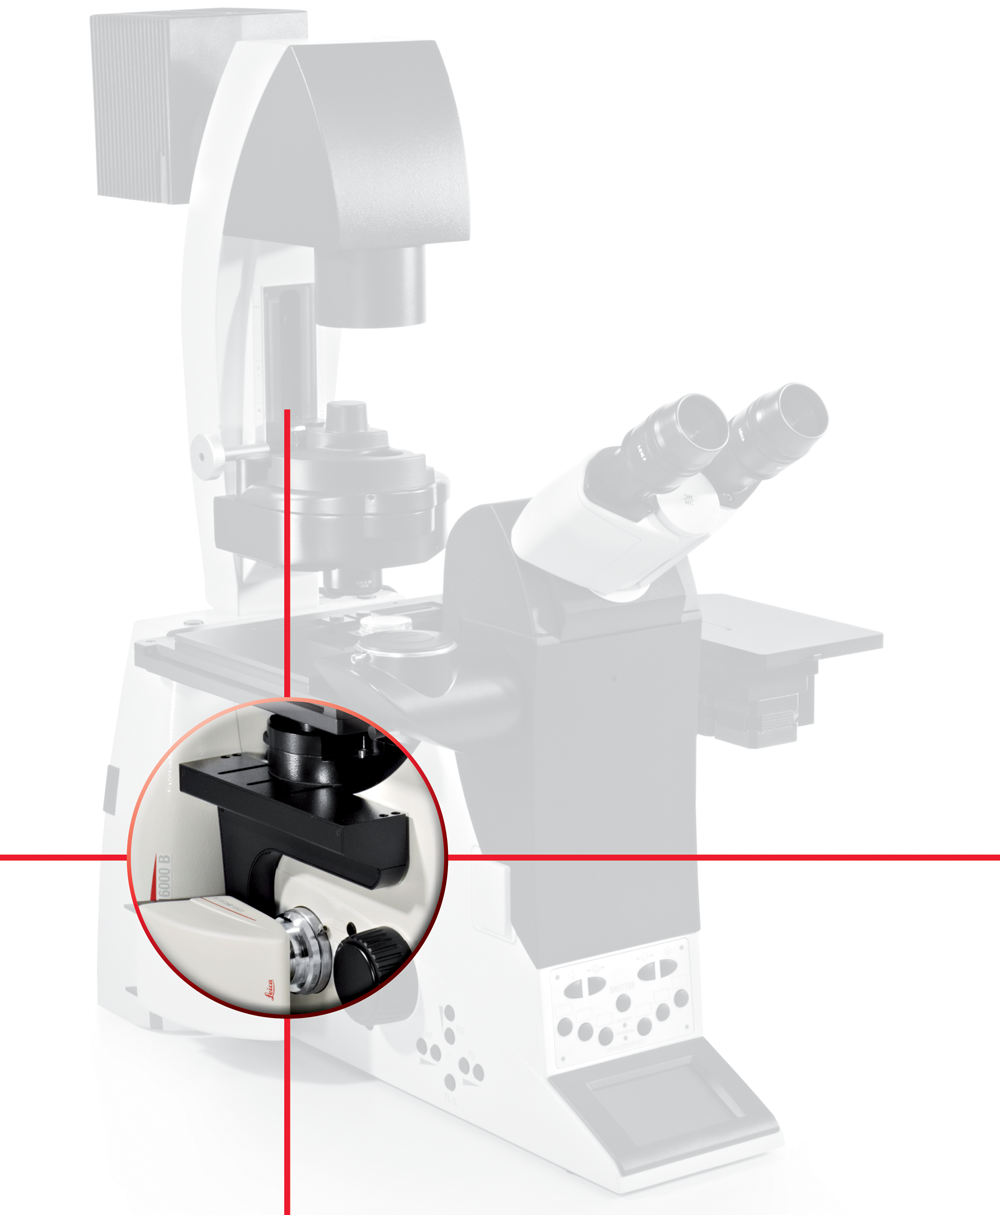 Sistema de microscópio automatizado Leica DMI6000 B com controle adaptativo de foco